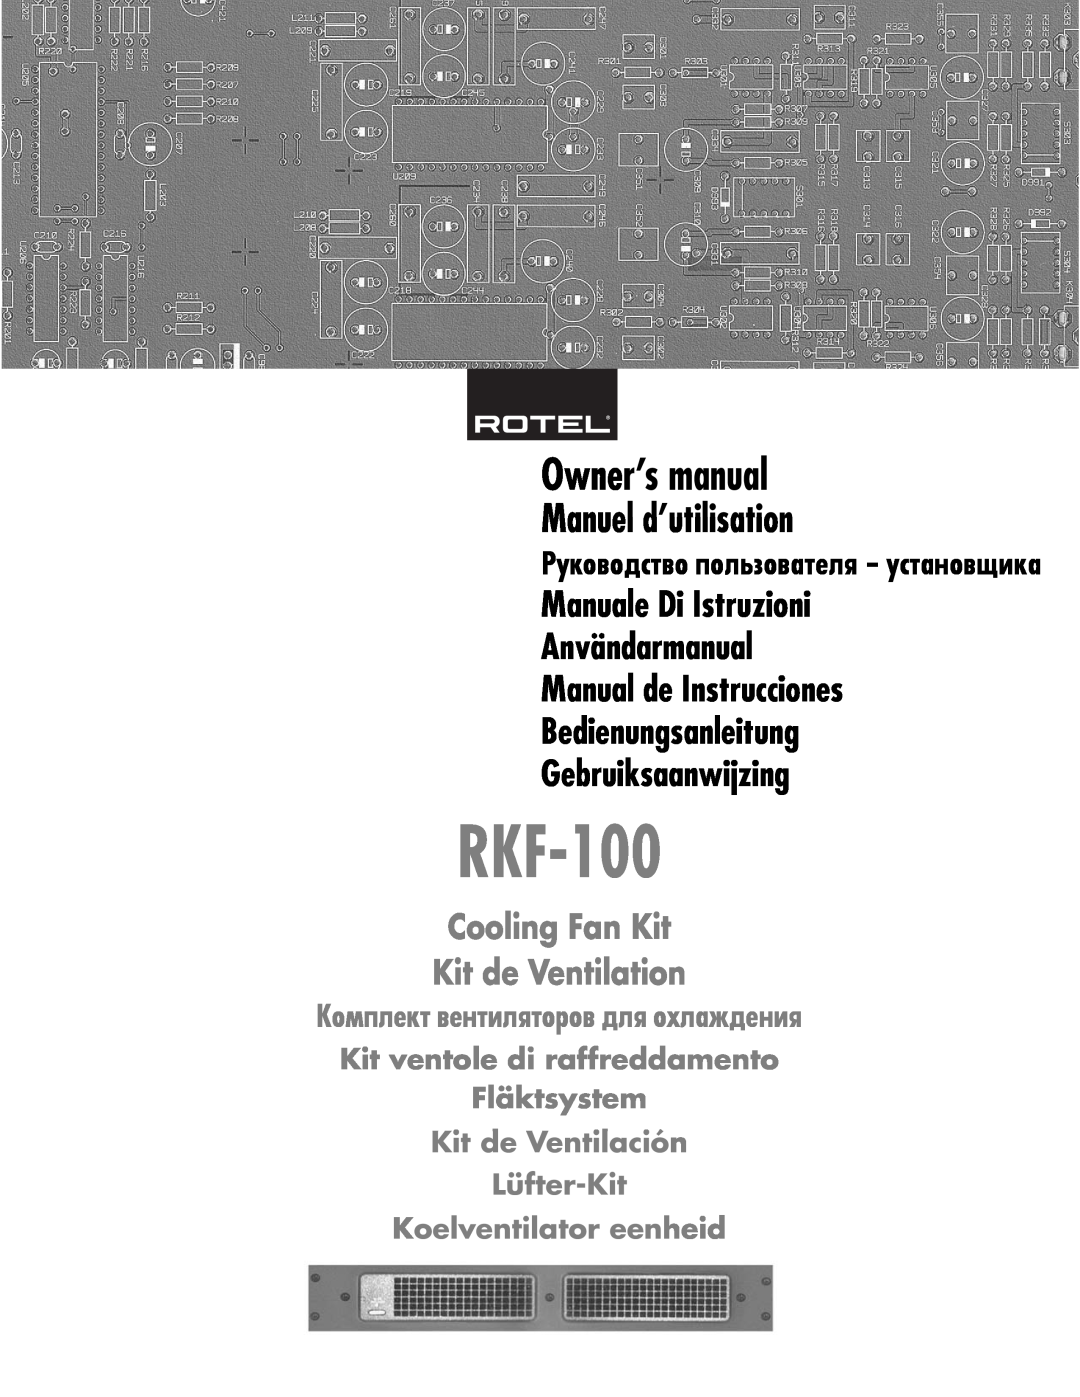 Rotel RKF-100 owner manual Manuel d’utilisation, Owner’sOwner’smanualmanual, Руководство пользователя - установщика 